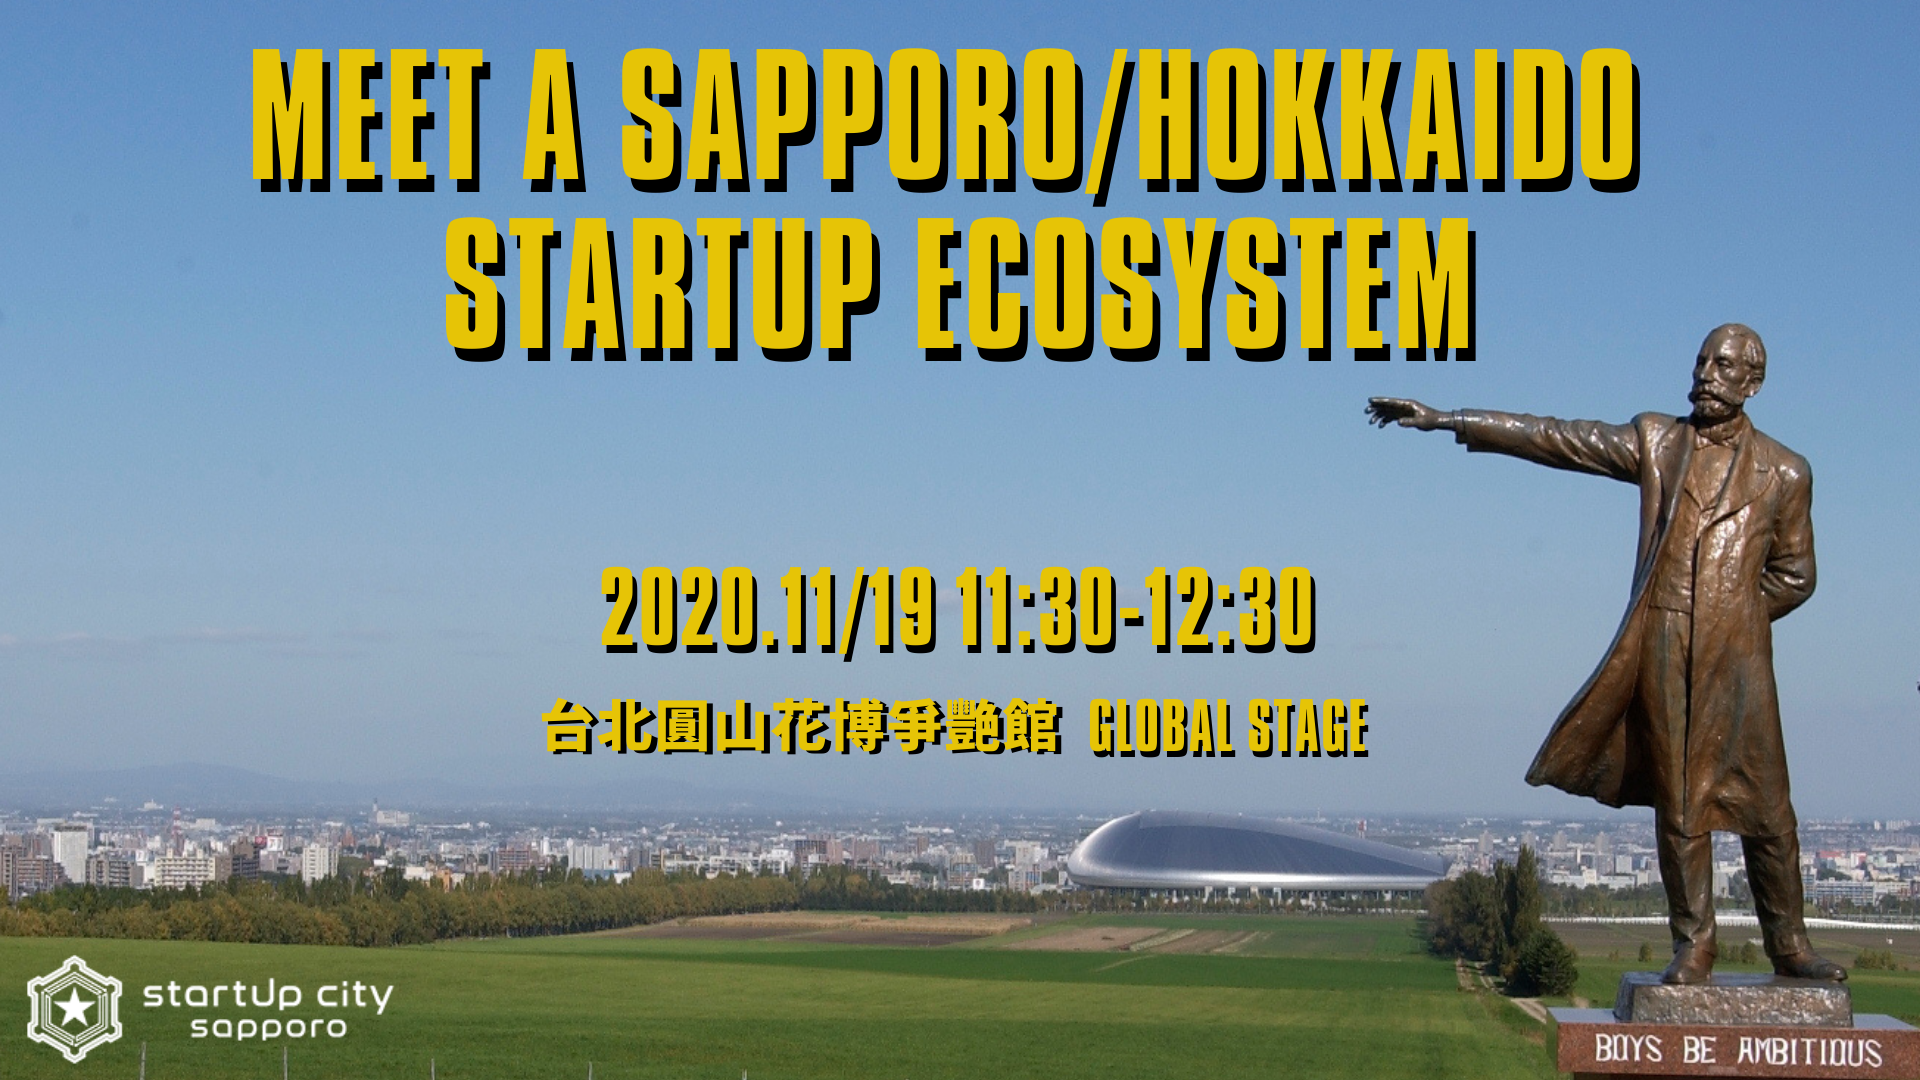 Meet Sapporo/Hokkaido Startup Ecosystem